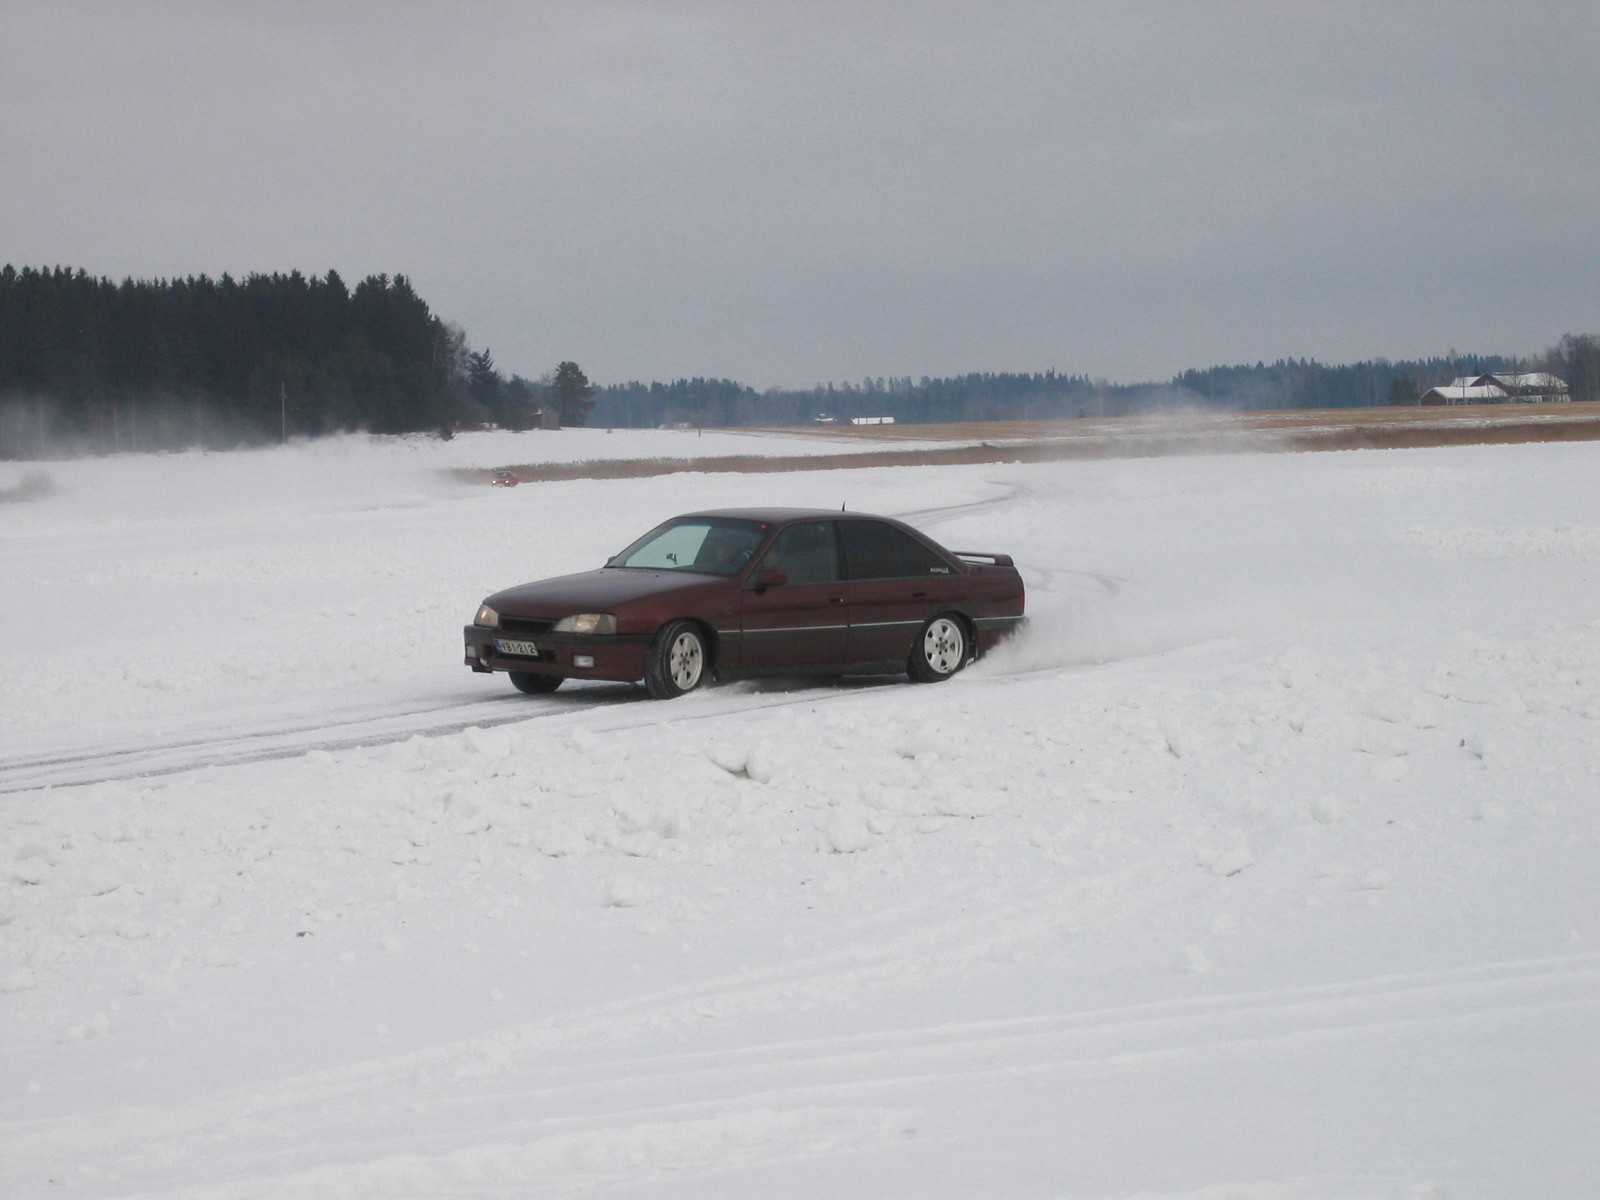 TalvipÃ¶rinÃ¤t KantelejÃ¤rvellÃ¤ 22.2.2009, Punainen Opel Omega